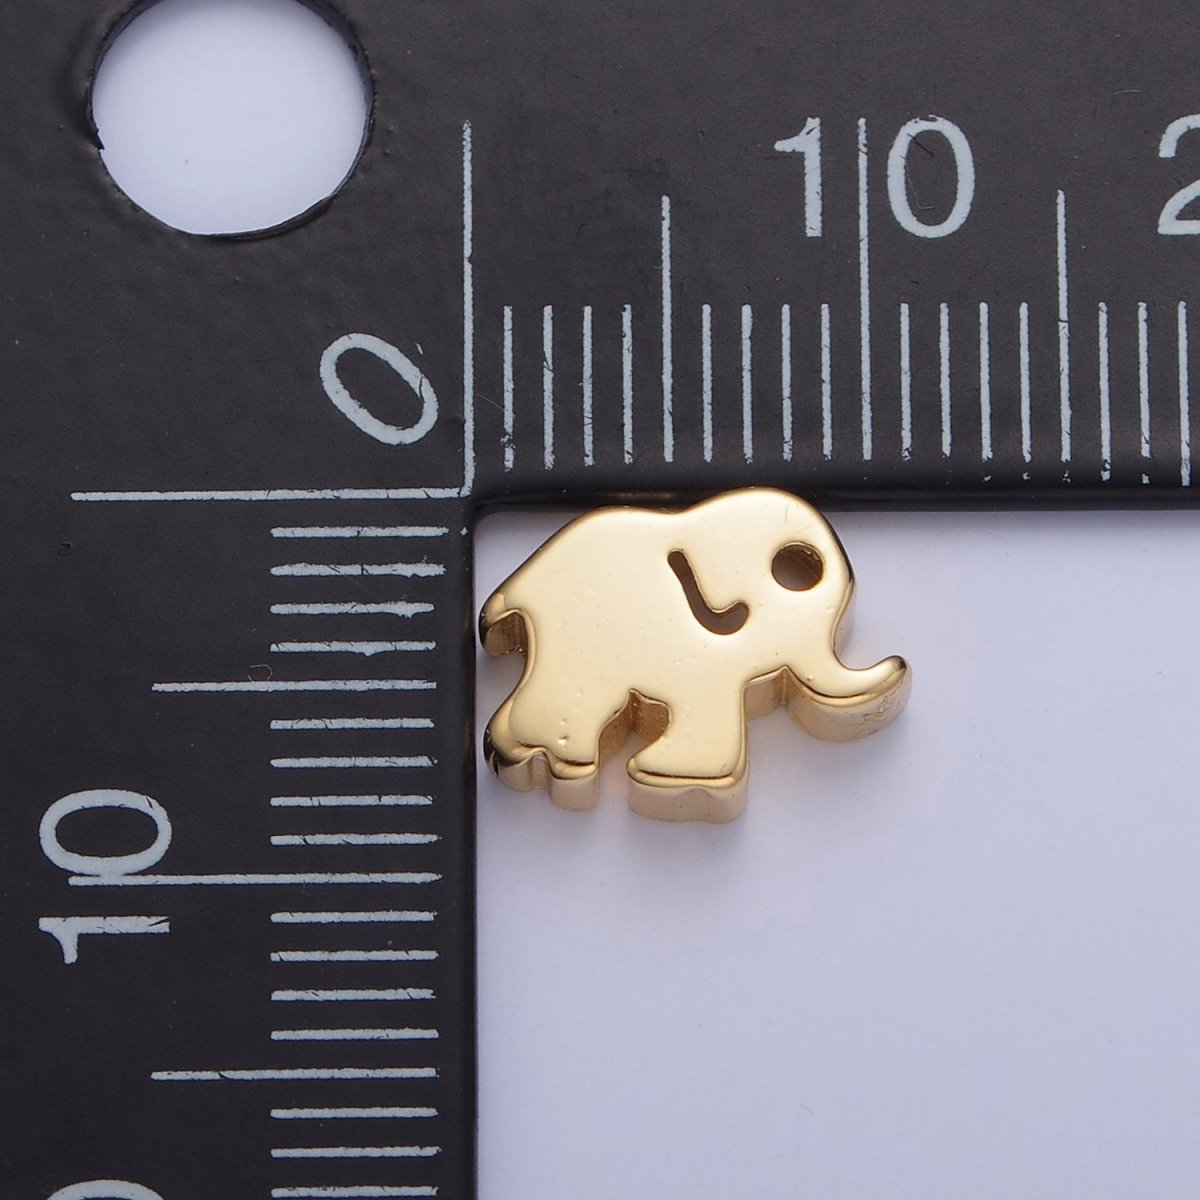 Dainty Gold Filled Elephant Bead Spacer for Bracelet W-856 - DLUXCA